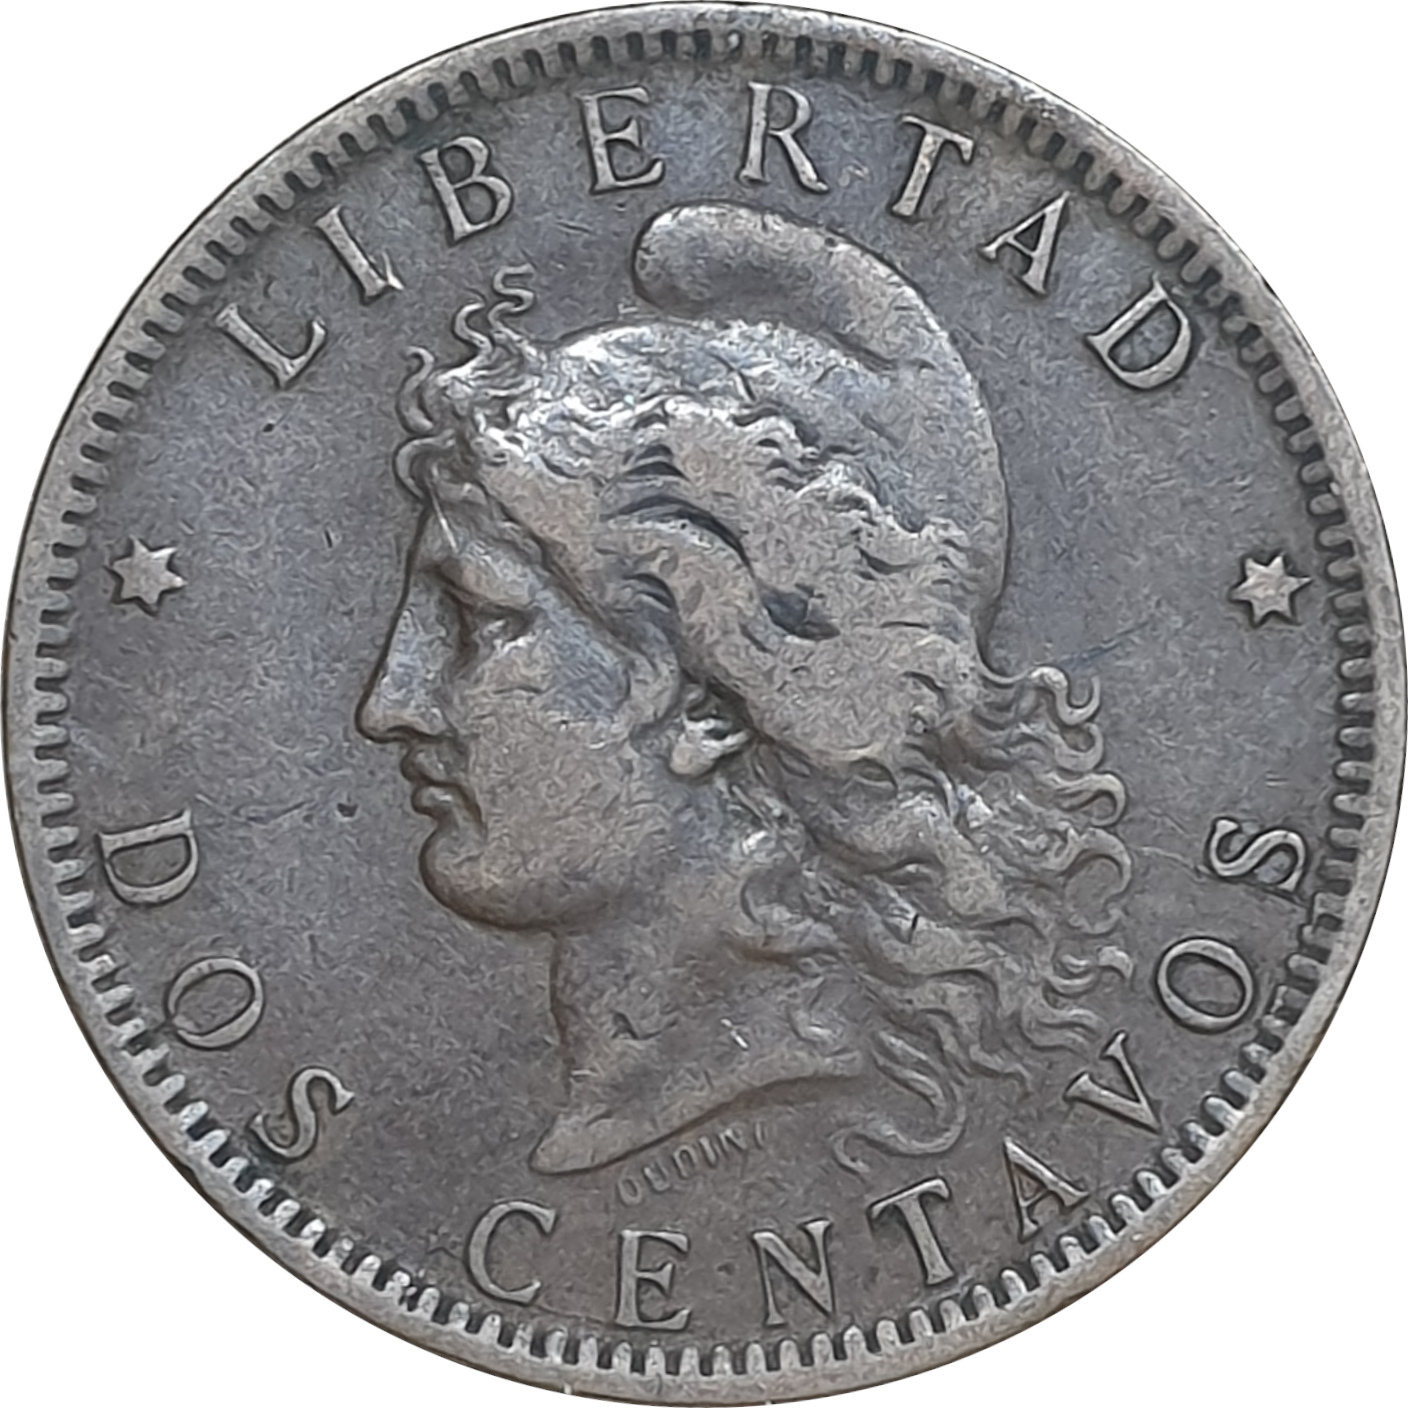 2 centavos - Liberty head